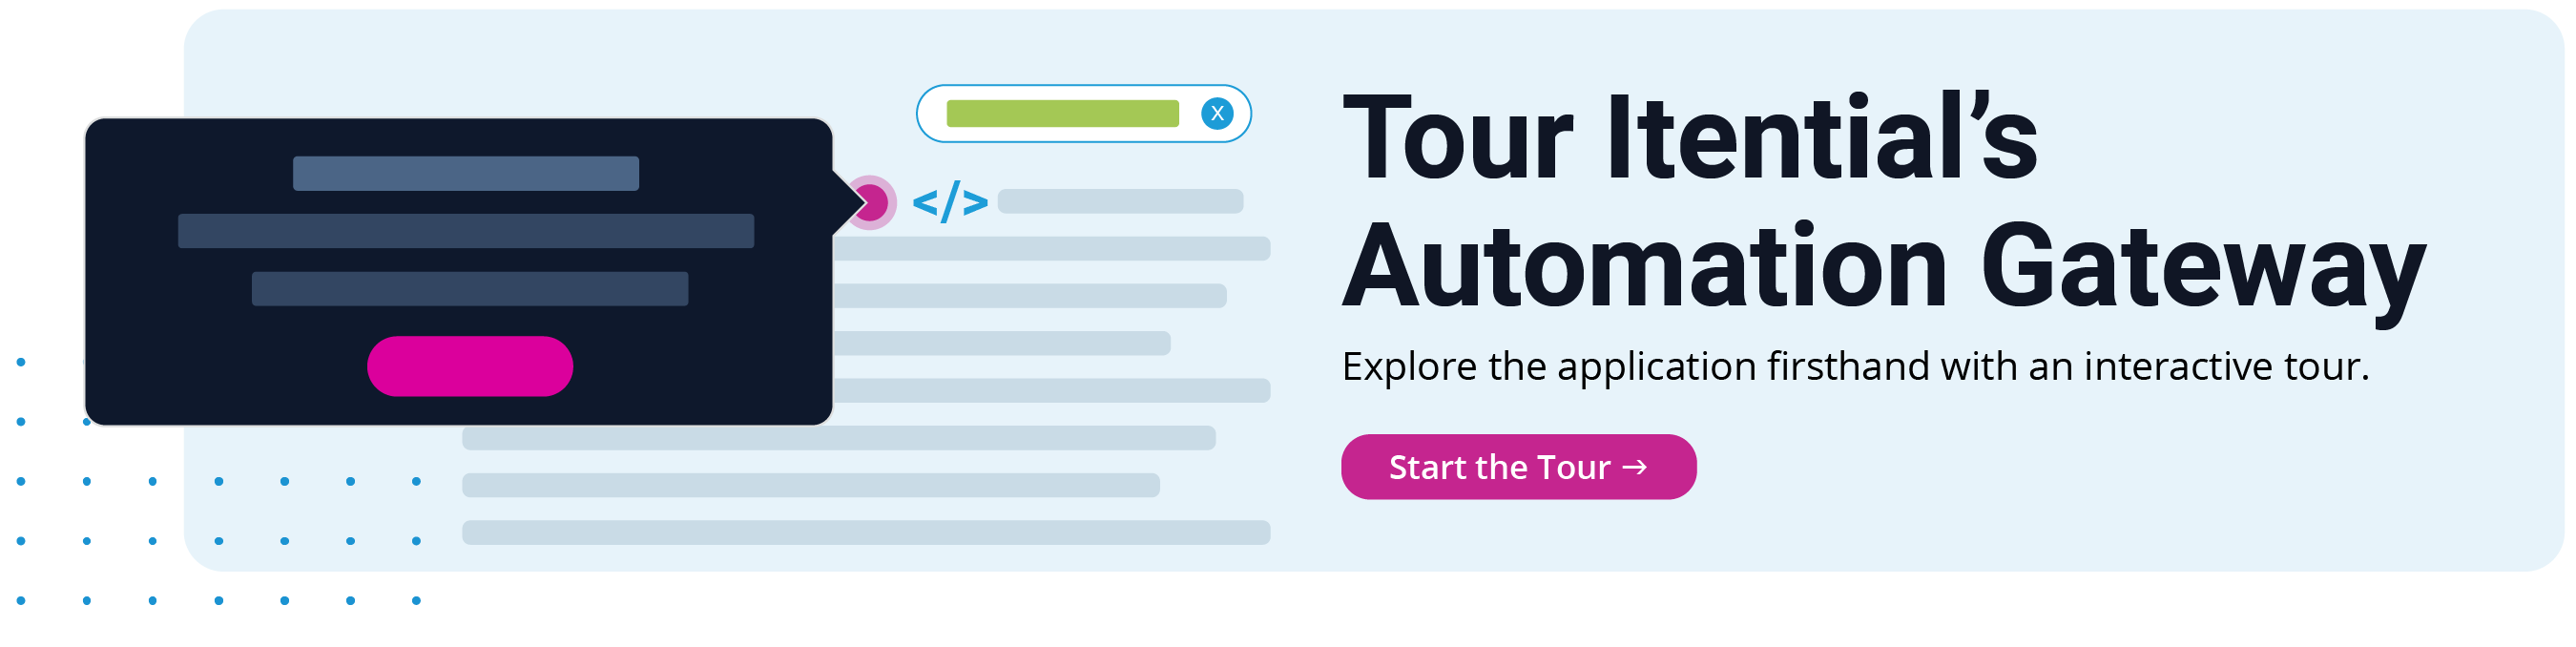 Tour Itential's Automation Gateway